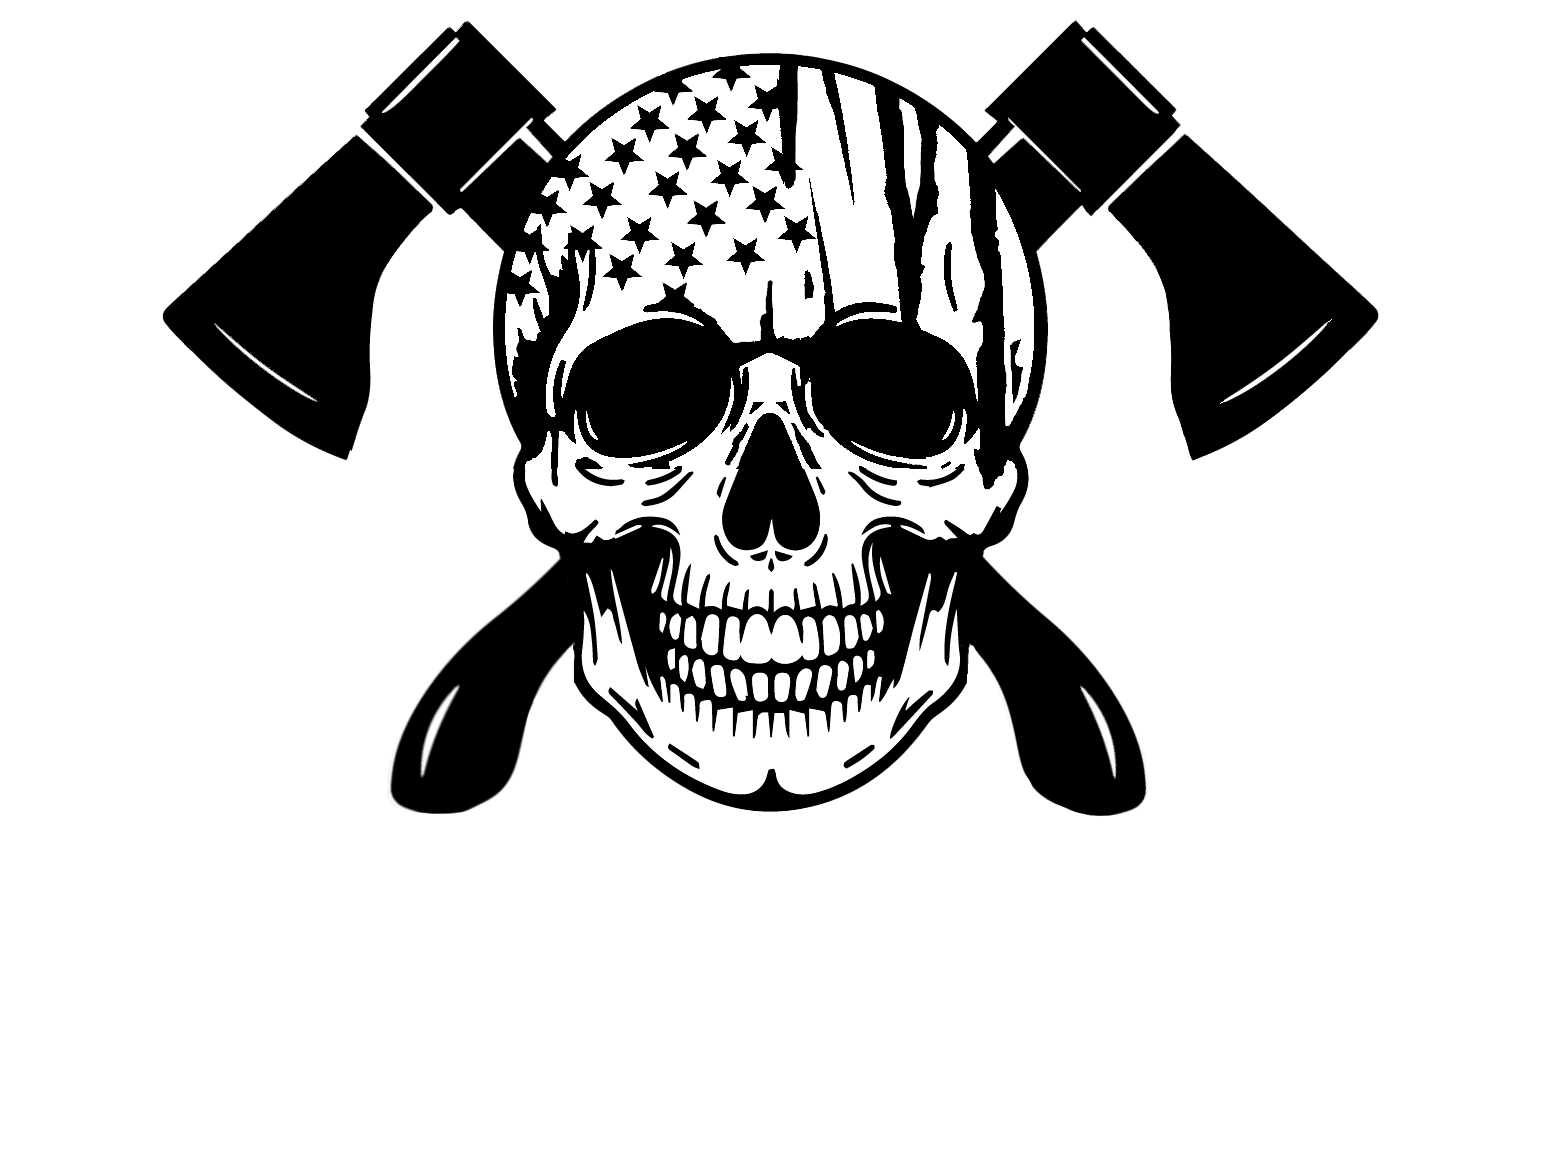 Warrior Throwing American flag skull and axes logo.